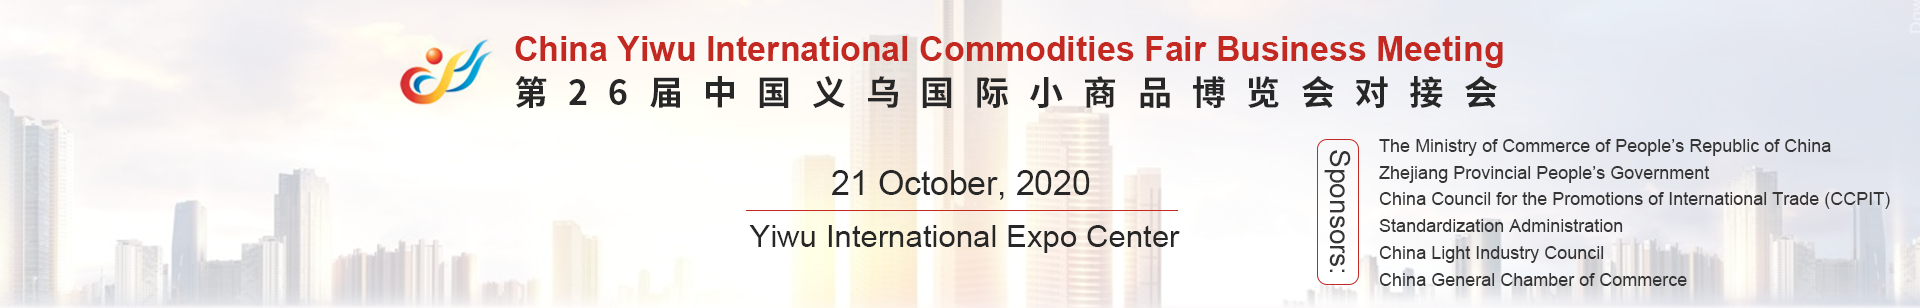 China Yiwu International Commodities Fair Business meeting